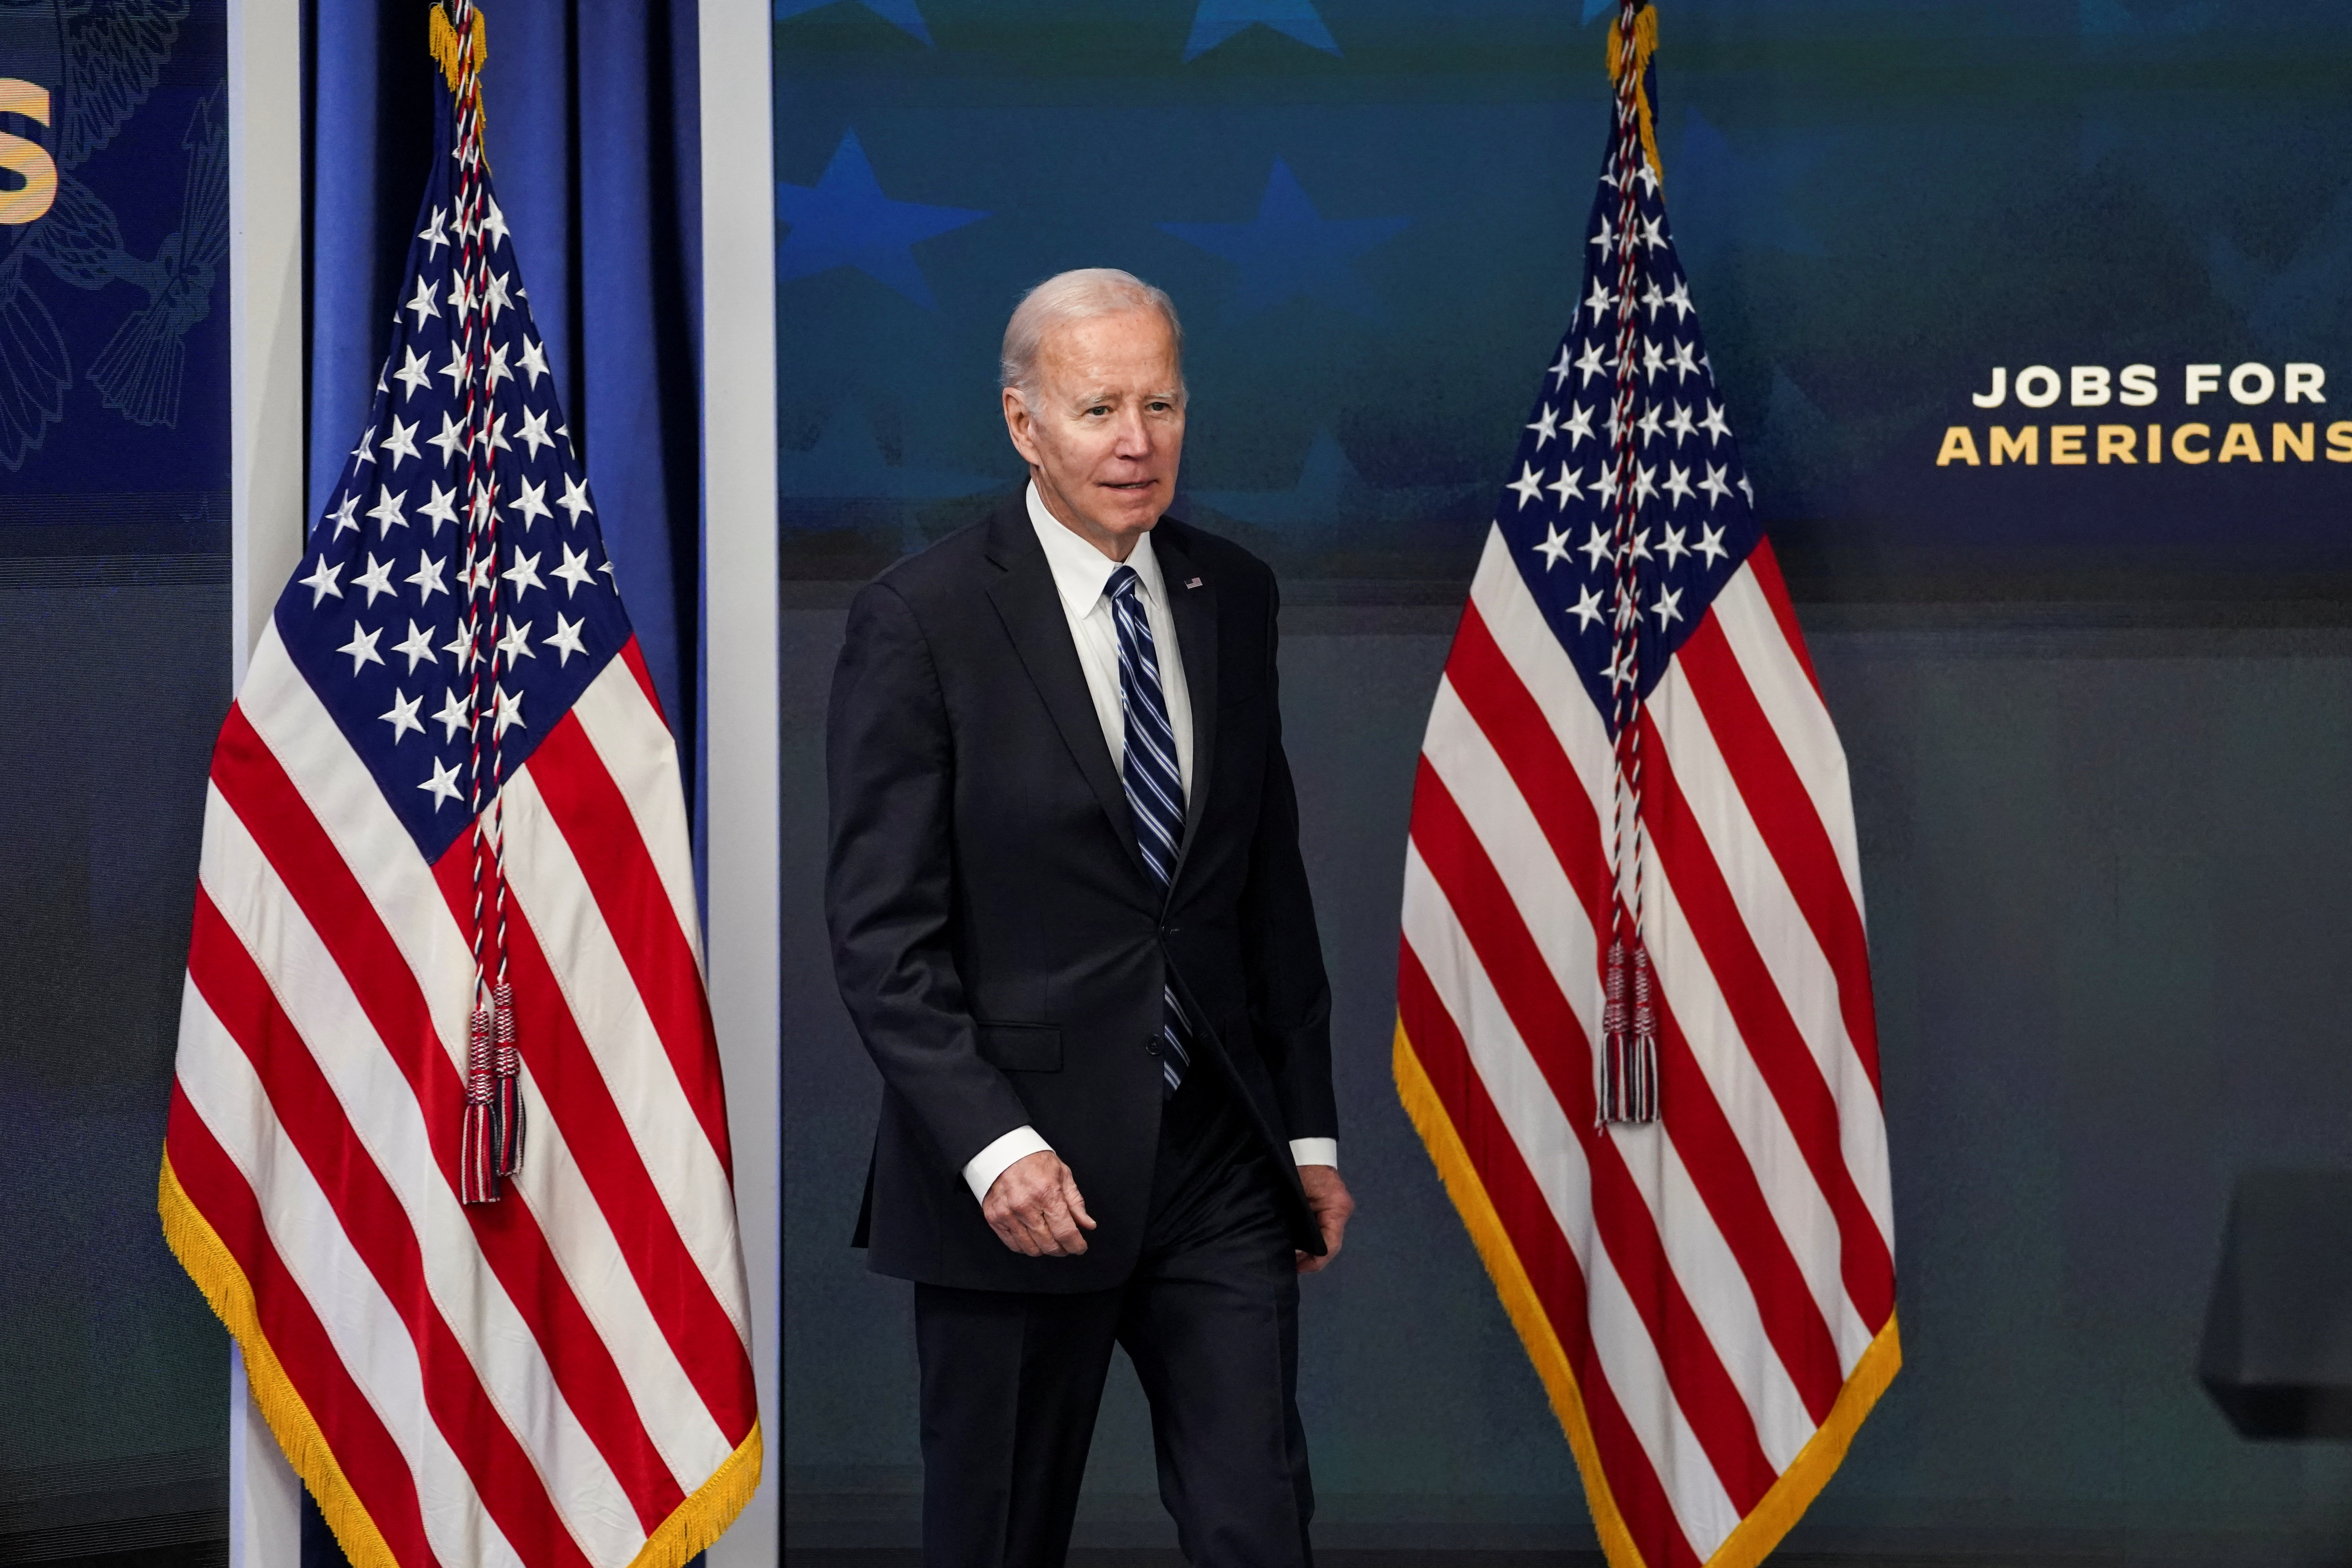 U.S. President Joe Biden speaks about January jobs report at the White House in Washington